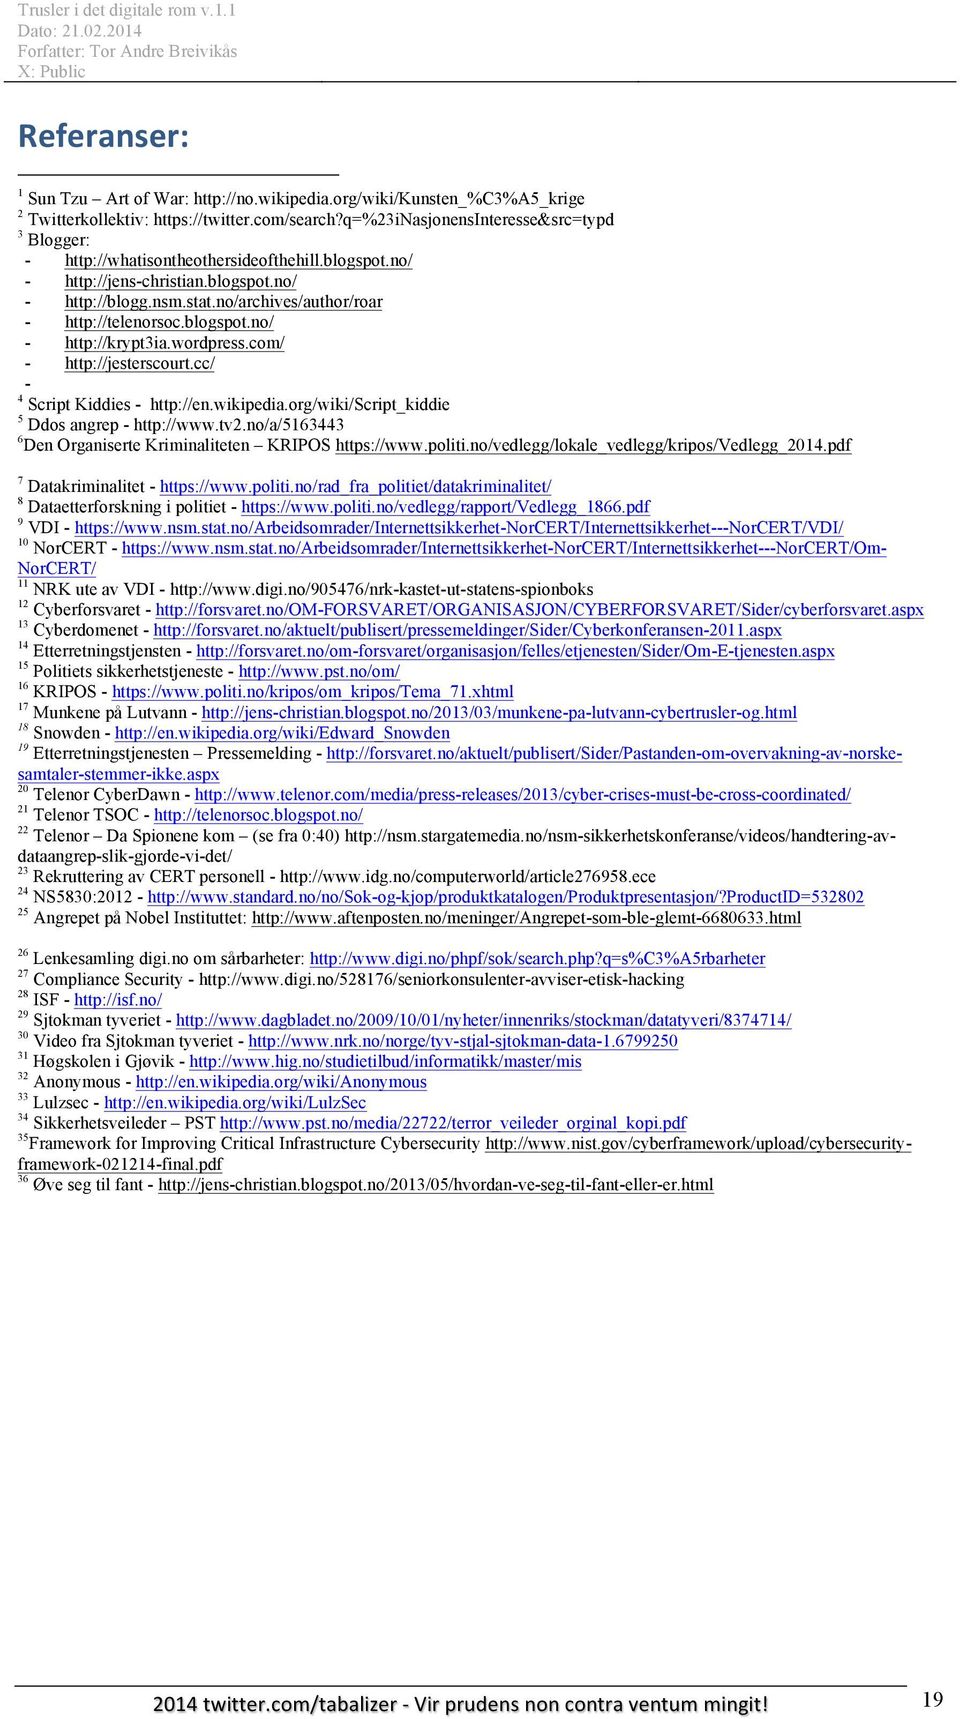 no/archives/author/roar - http://telenorsoc.blogspot.no/ - http://krypt3ia.wordpress.com/ - http://jesterscourt.cc/ - 4 Script Kiddies - http://en.wikipedia.